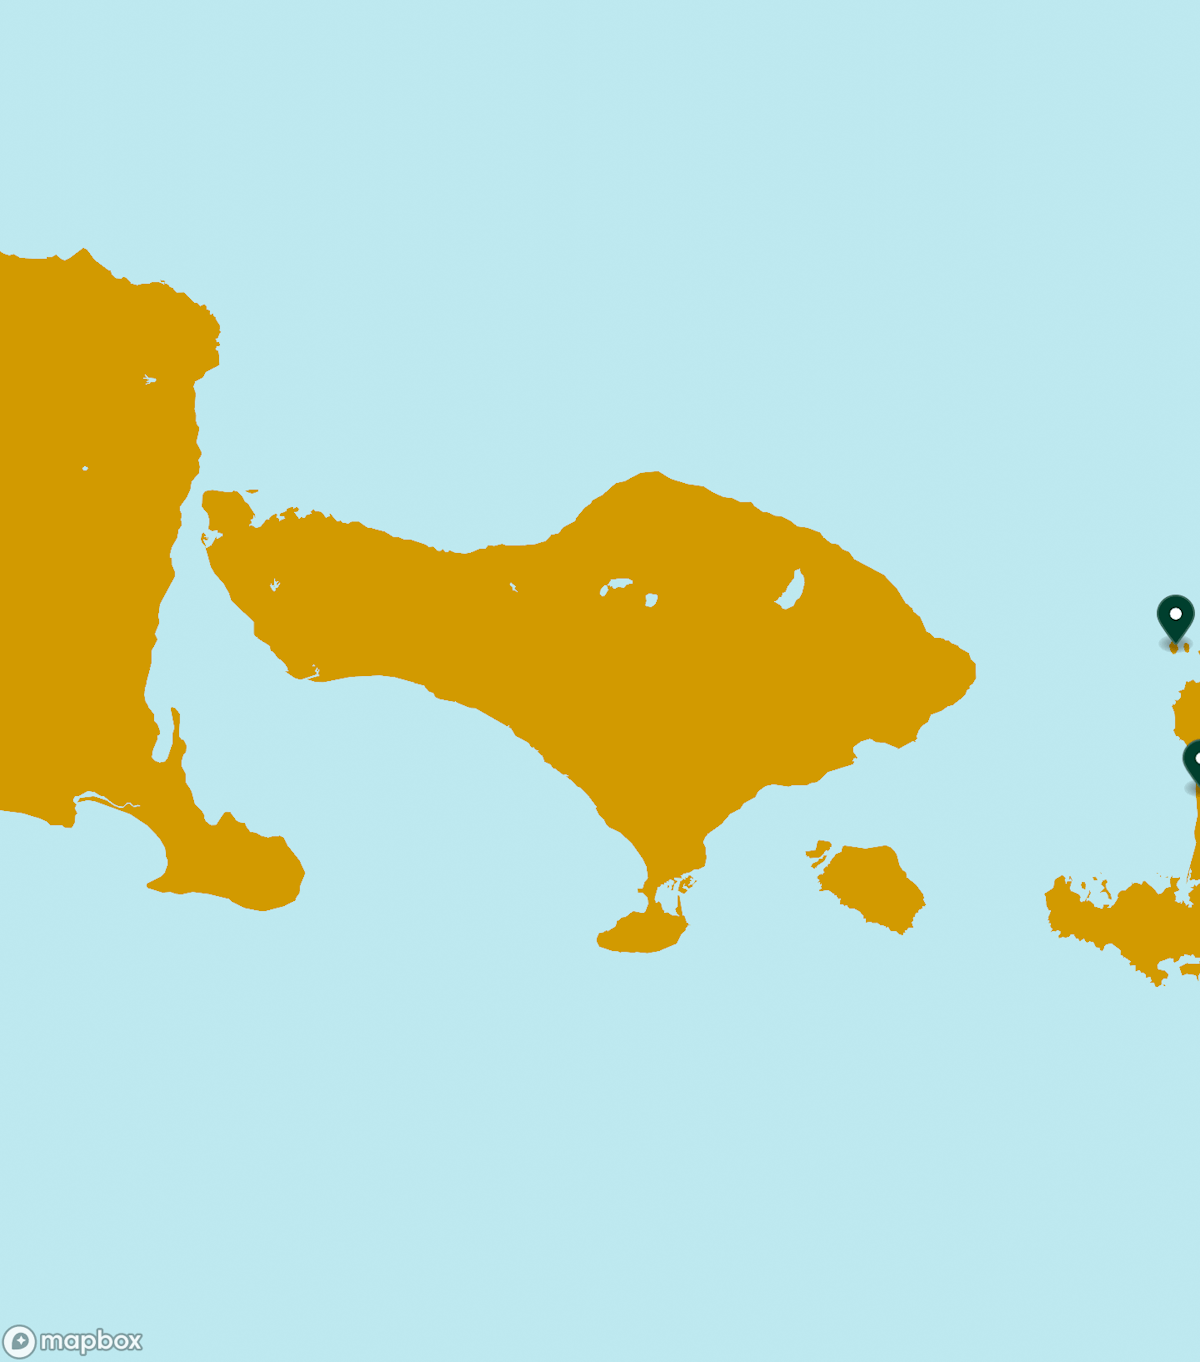 Indonesia Destinations Map